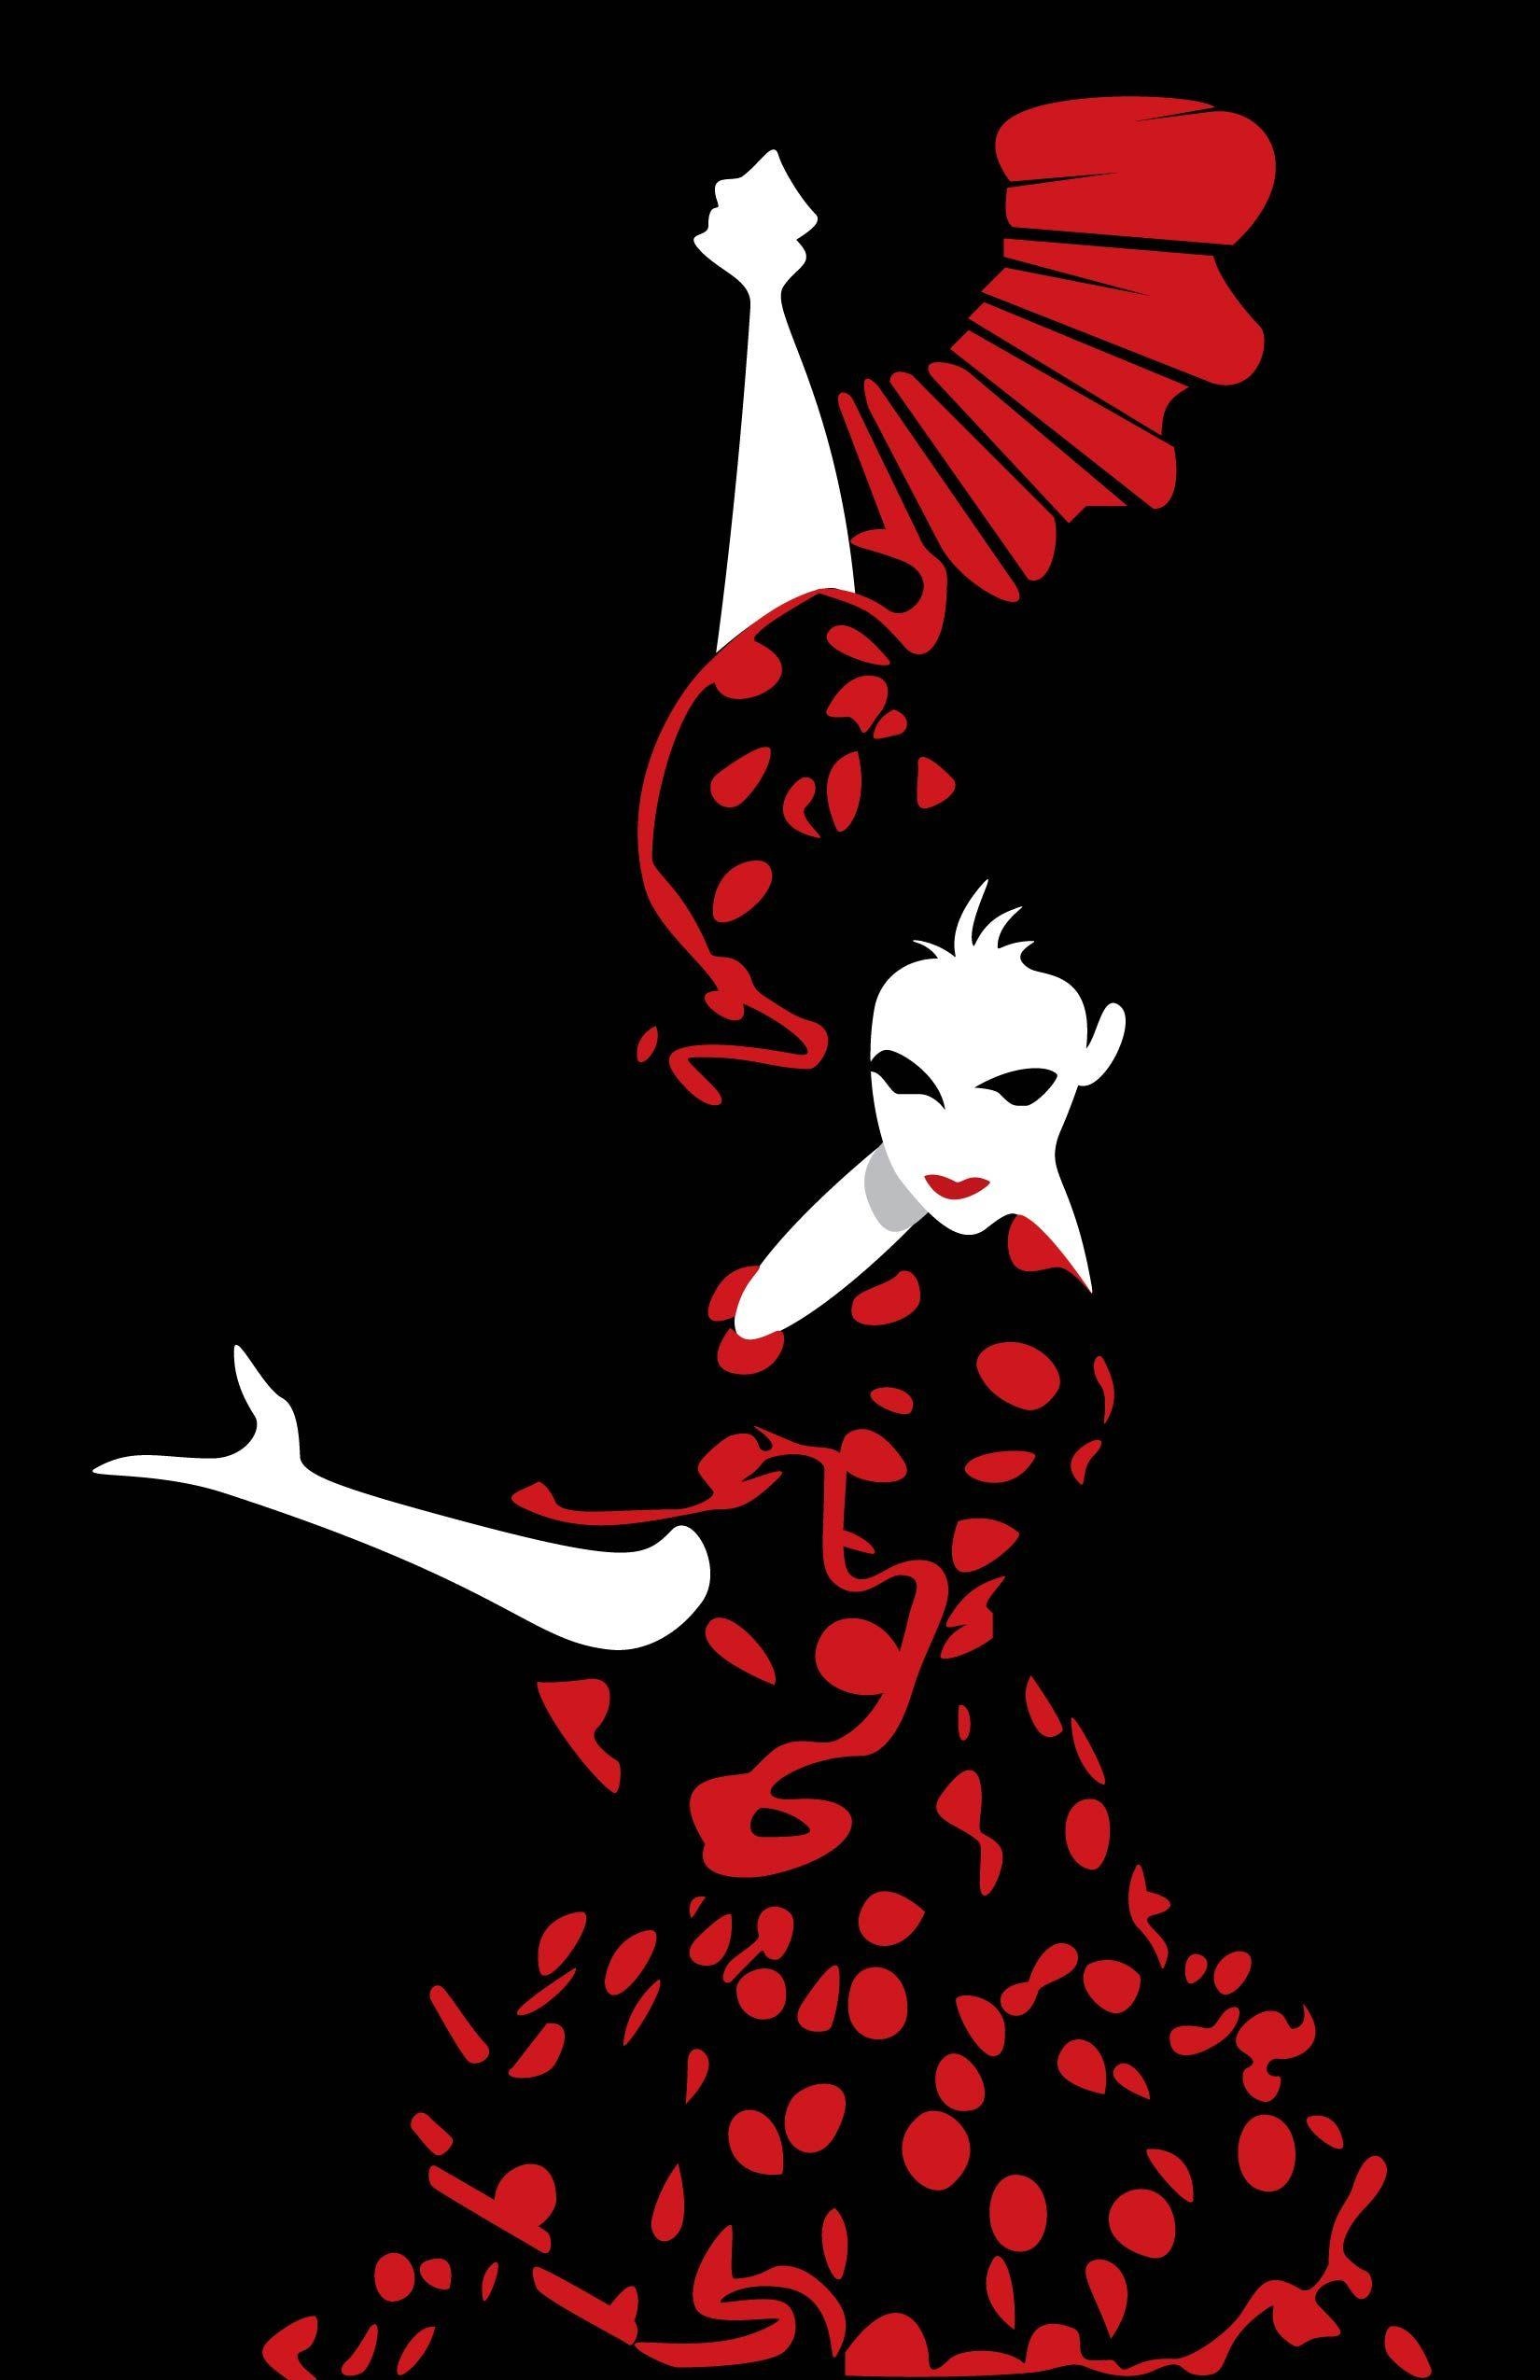 Flamenco: Minimalistic, Dancing technique, Intricate hand, arm, and body movements. 1650x2550 HD Wallpaper.